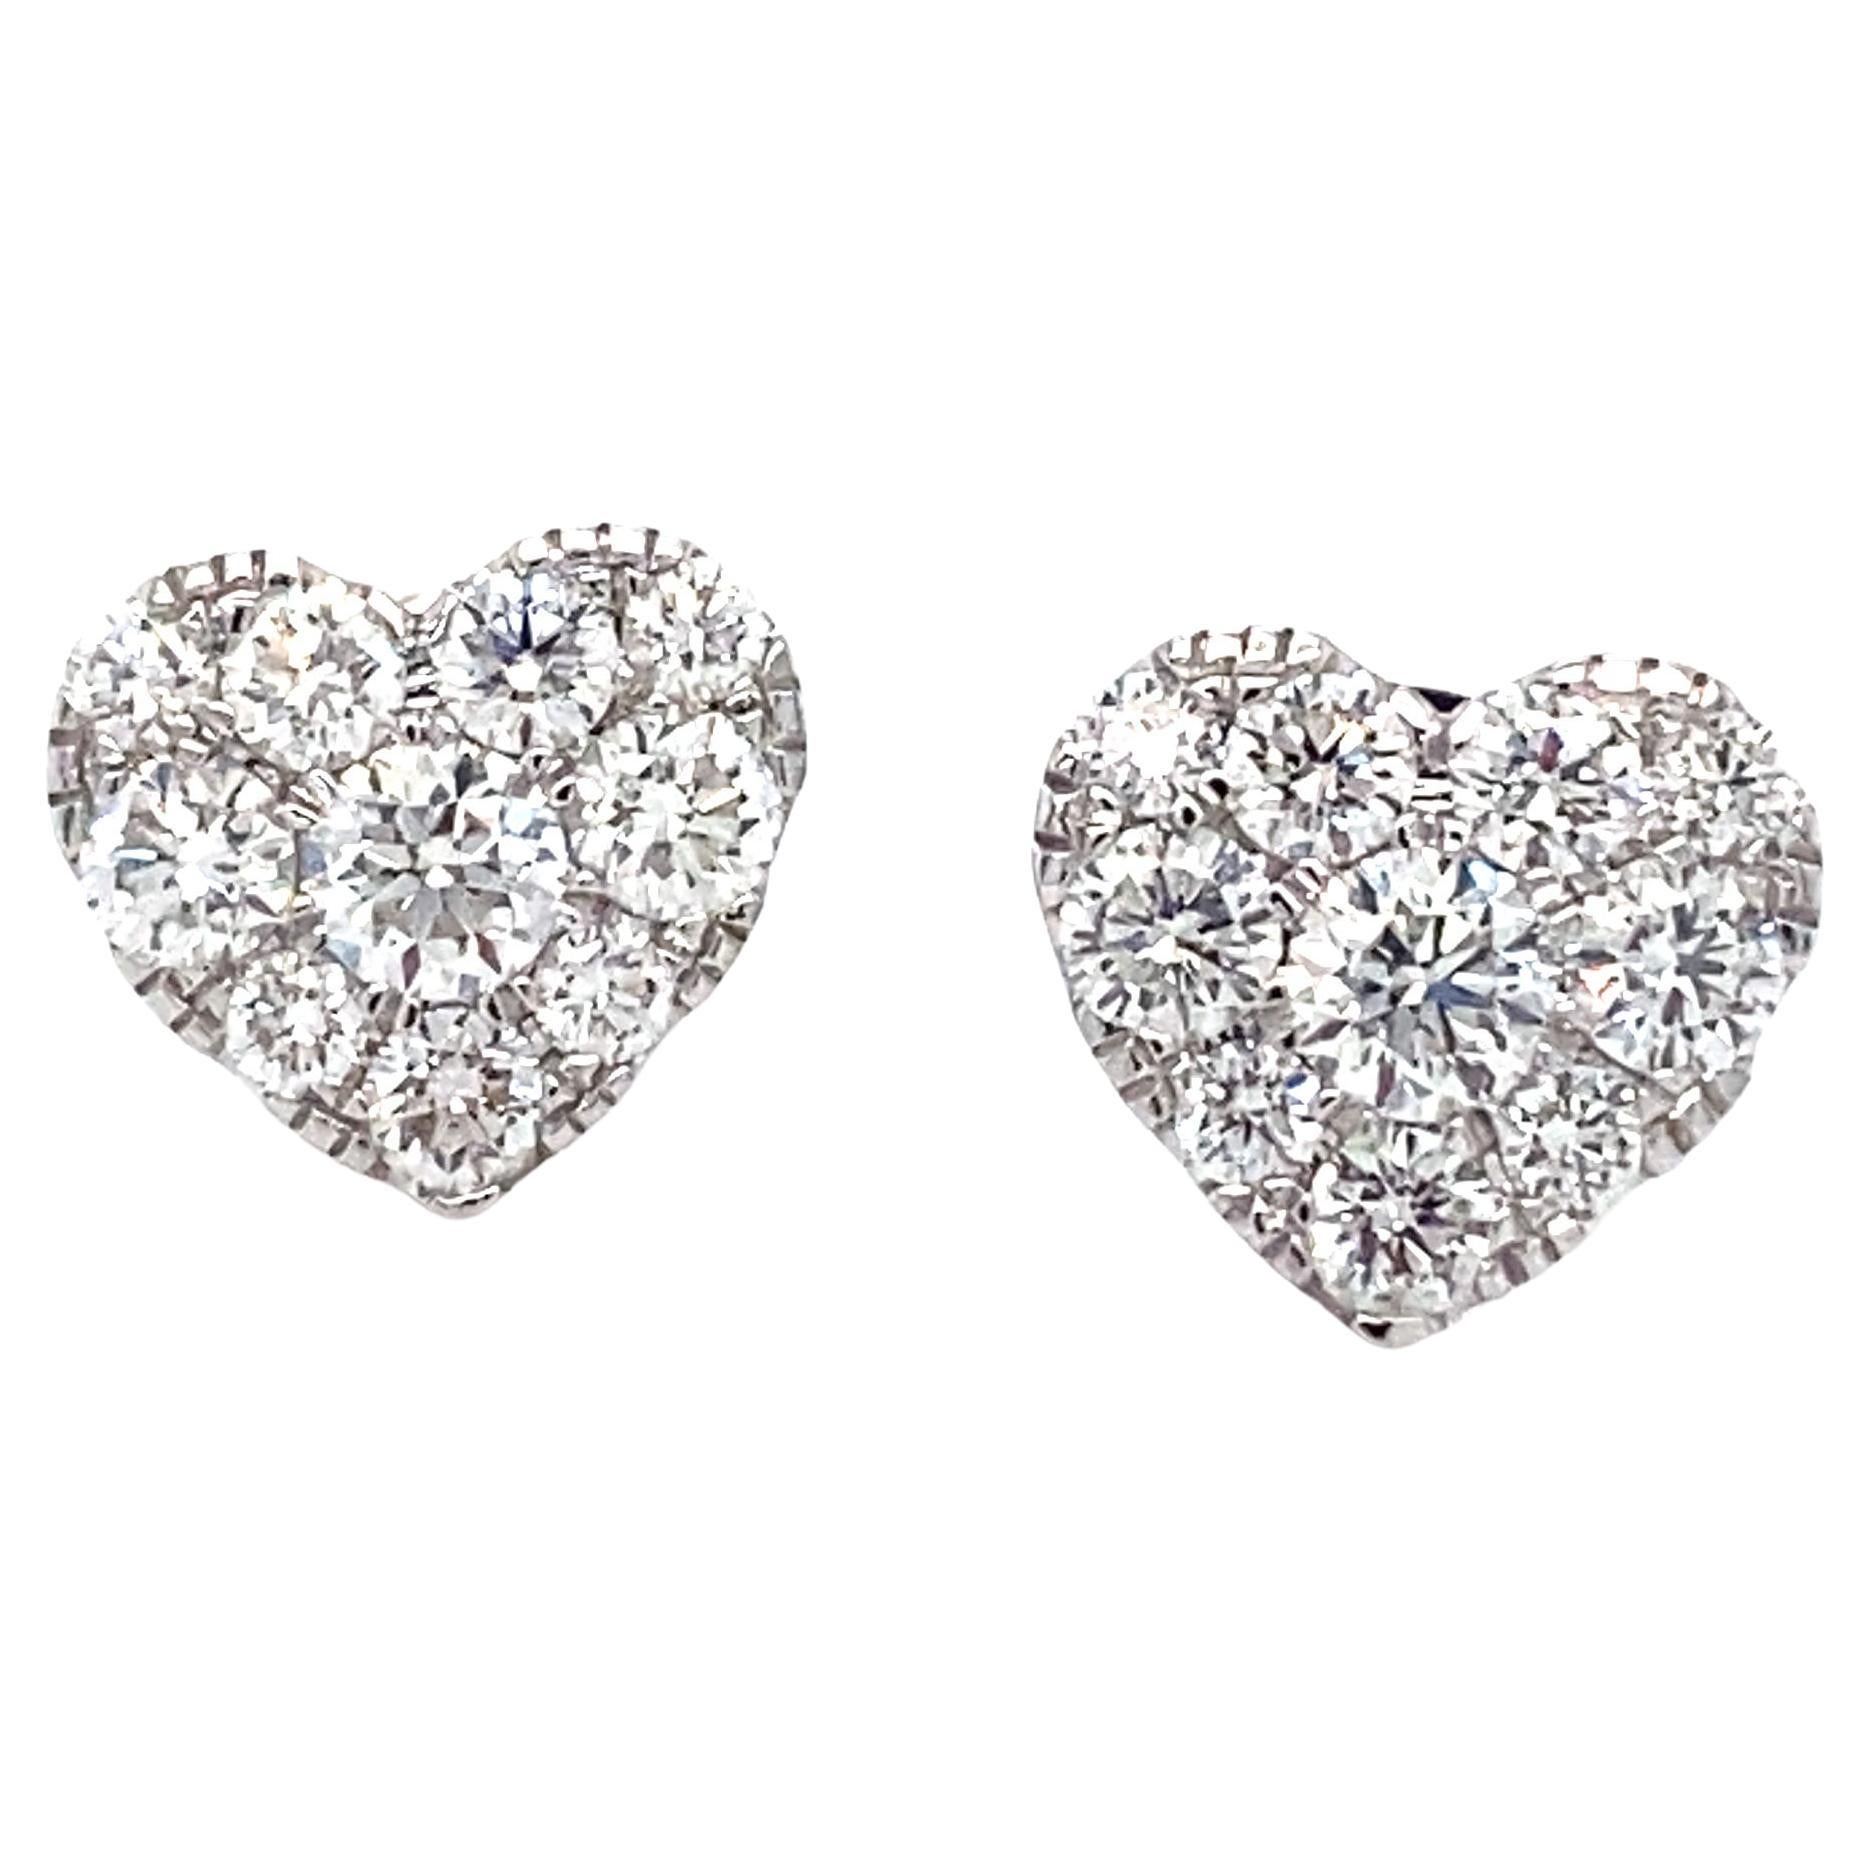 1.20 Carat Total Diamond Heart Earrings in 14 Karat White Gold For Sale